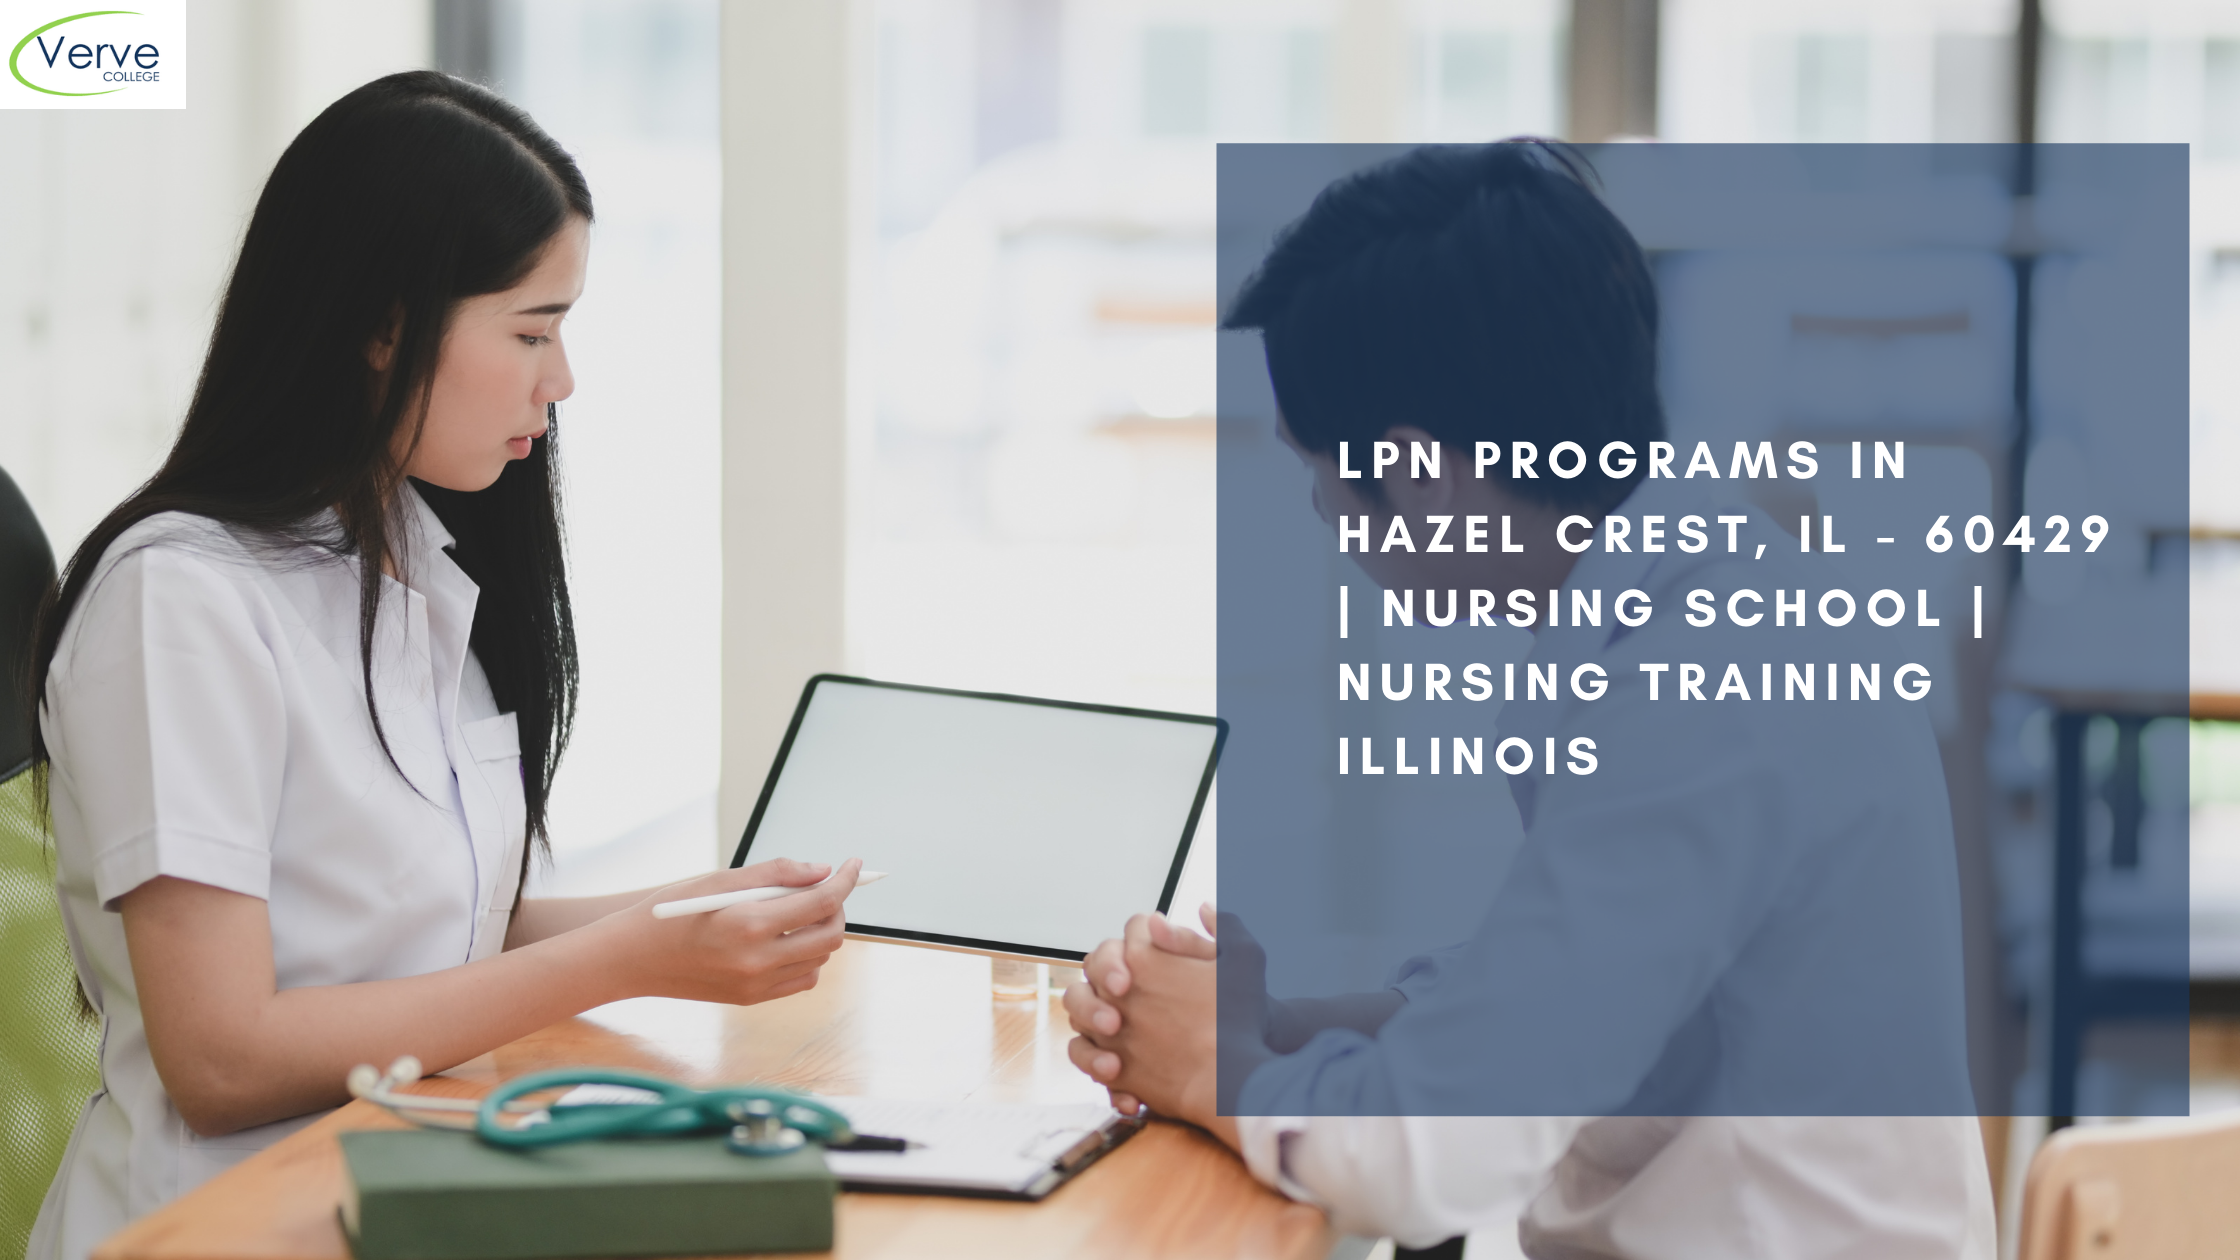 LPN Programs in Hazel Crest, IL – 60429 |Nursing School | Nursing Training Illinois